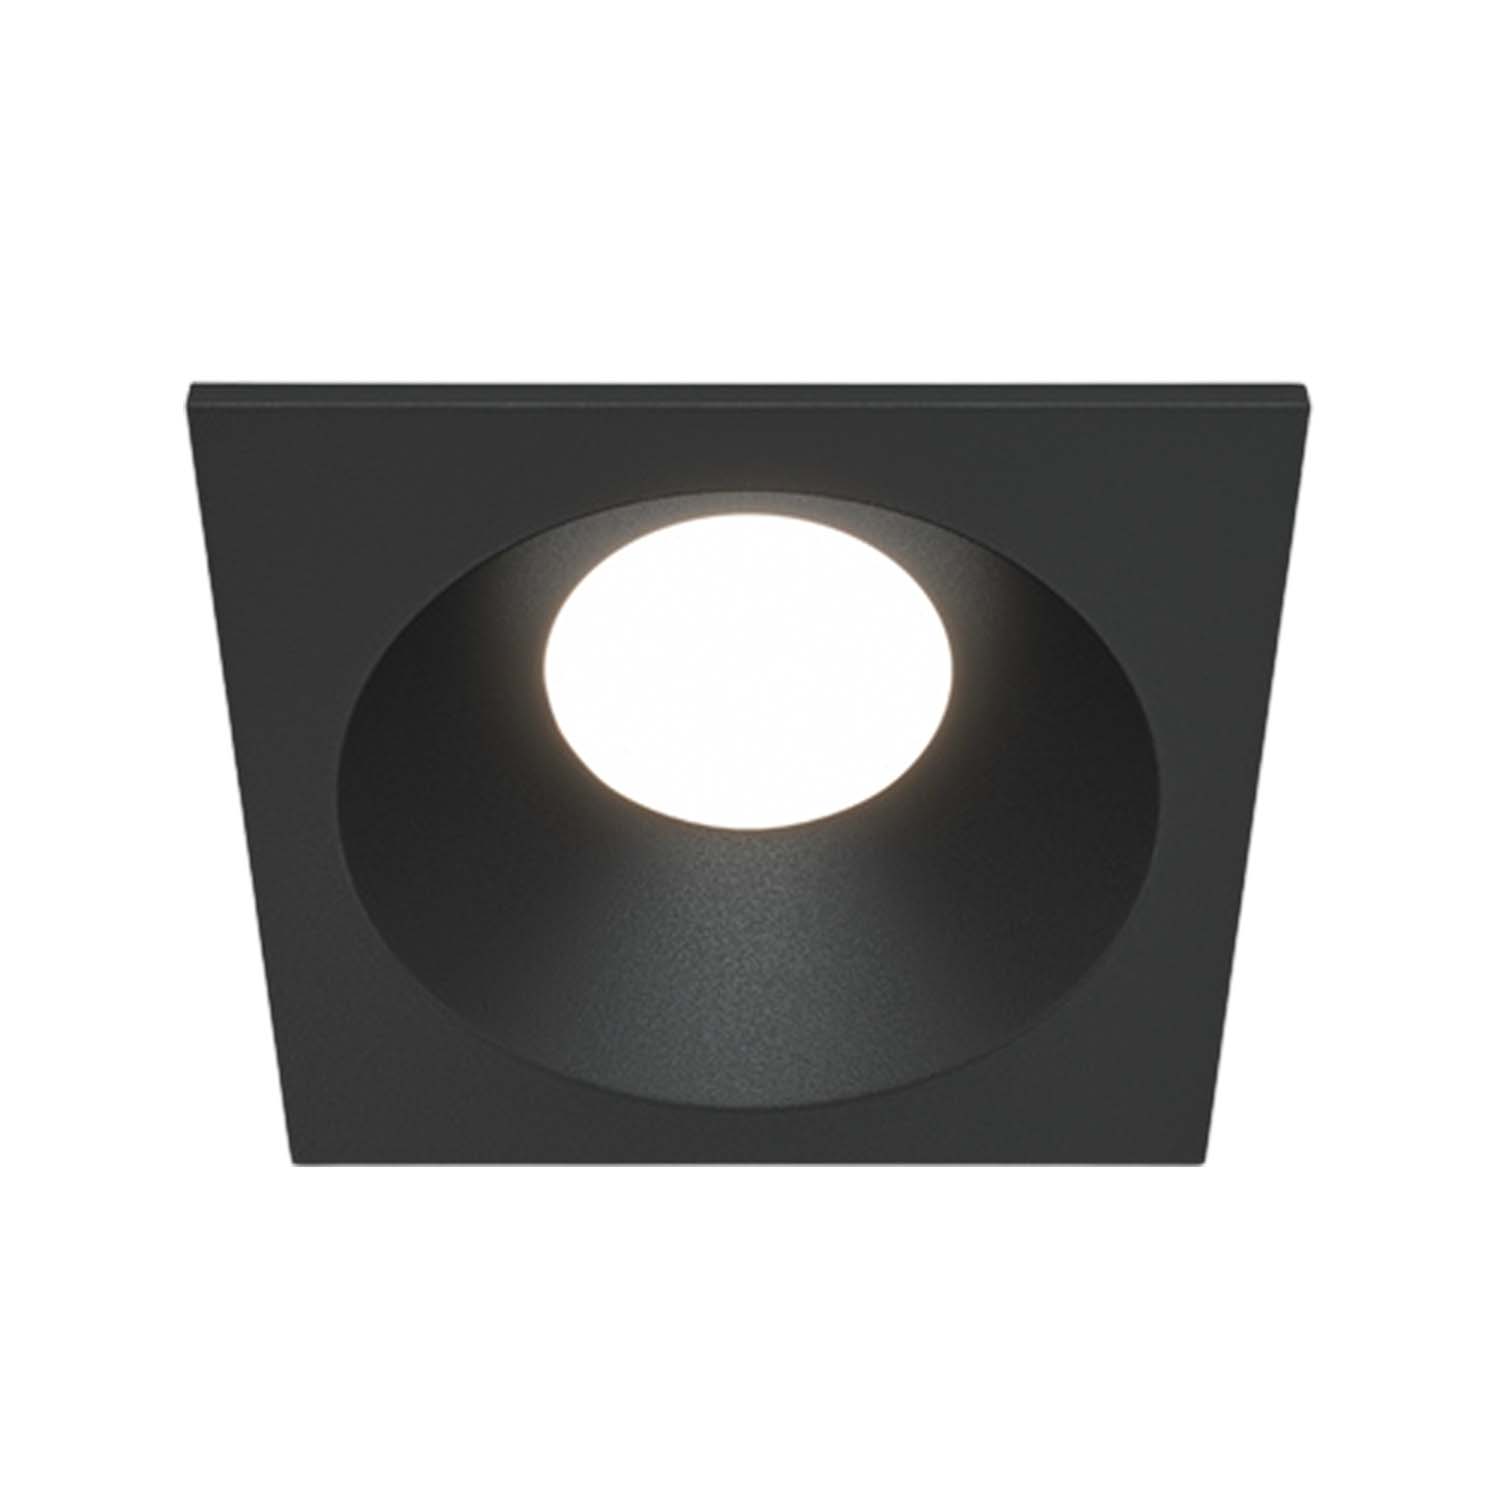 ZOOM B - Waterproof outdoor square recessed spotlight, black or white, 85mm